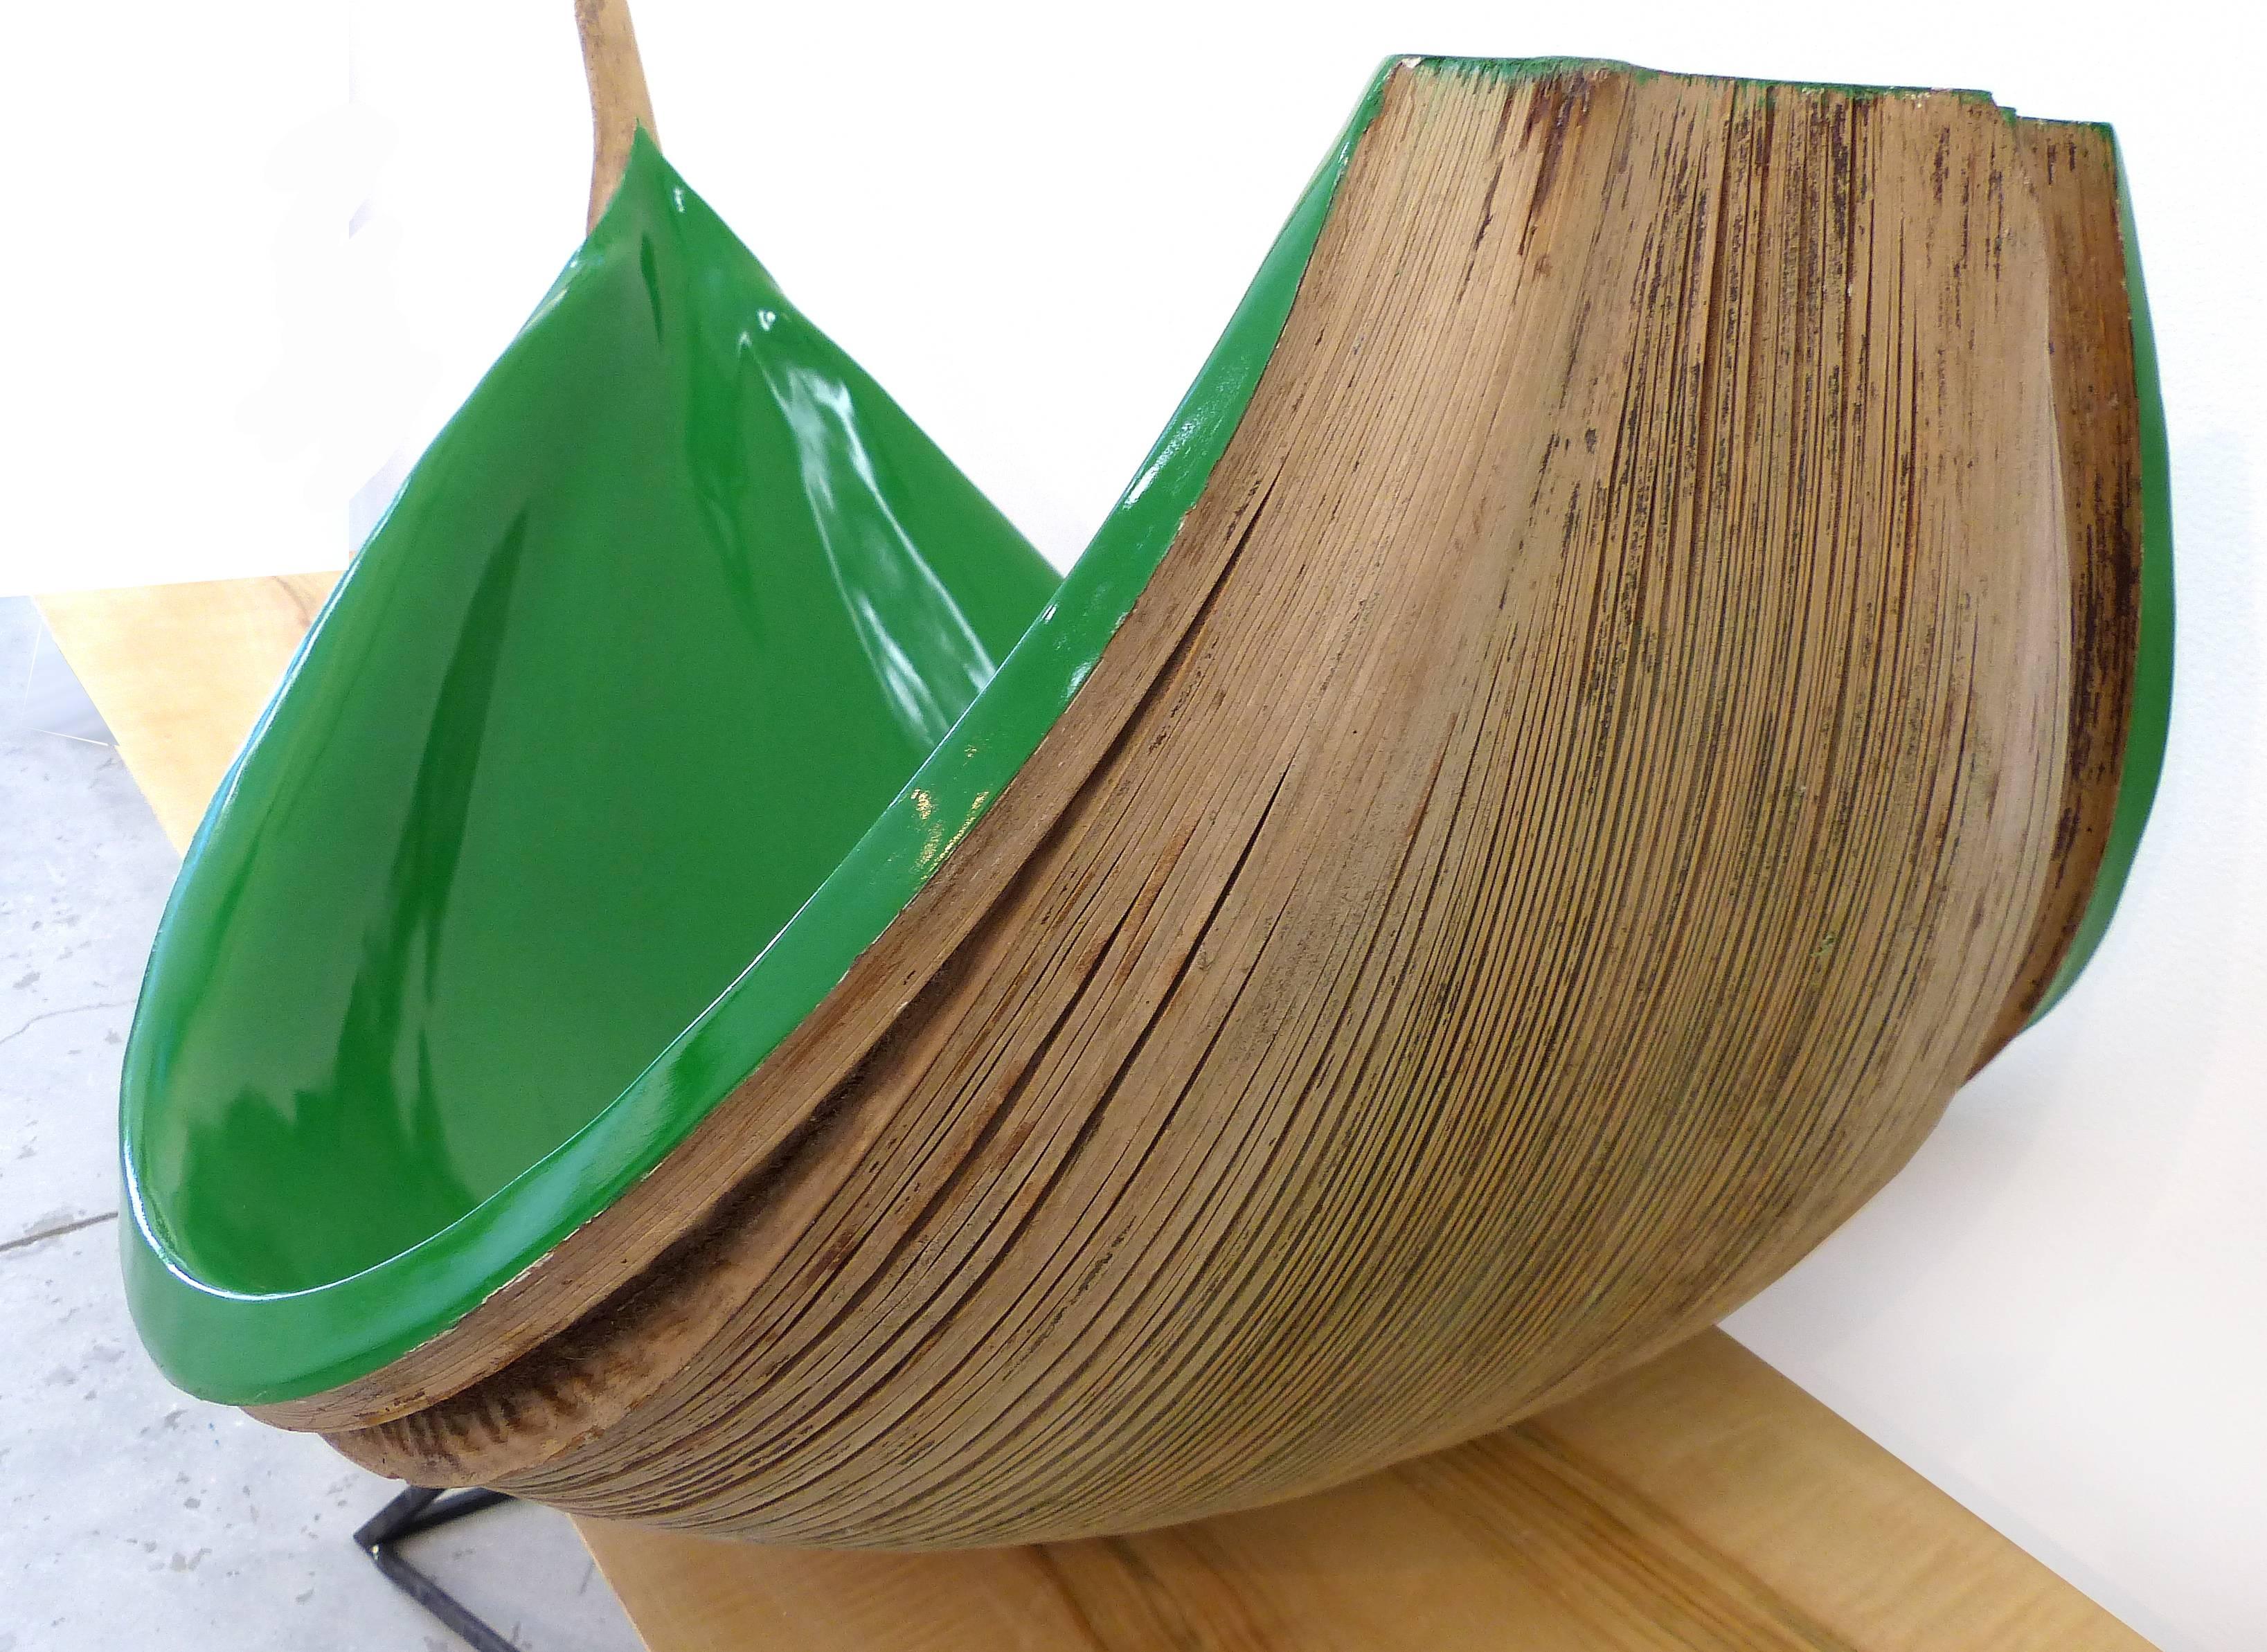 Organic Modern Brazilian Amazon Coconut Palm Frond Sculptural Bowl by Valeria Totti